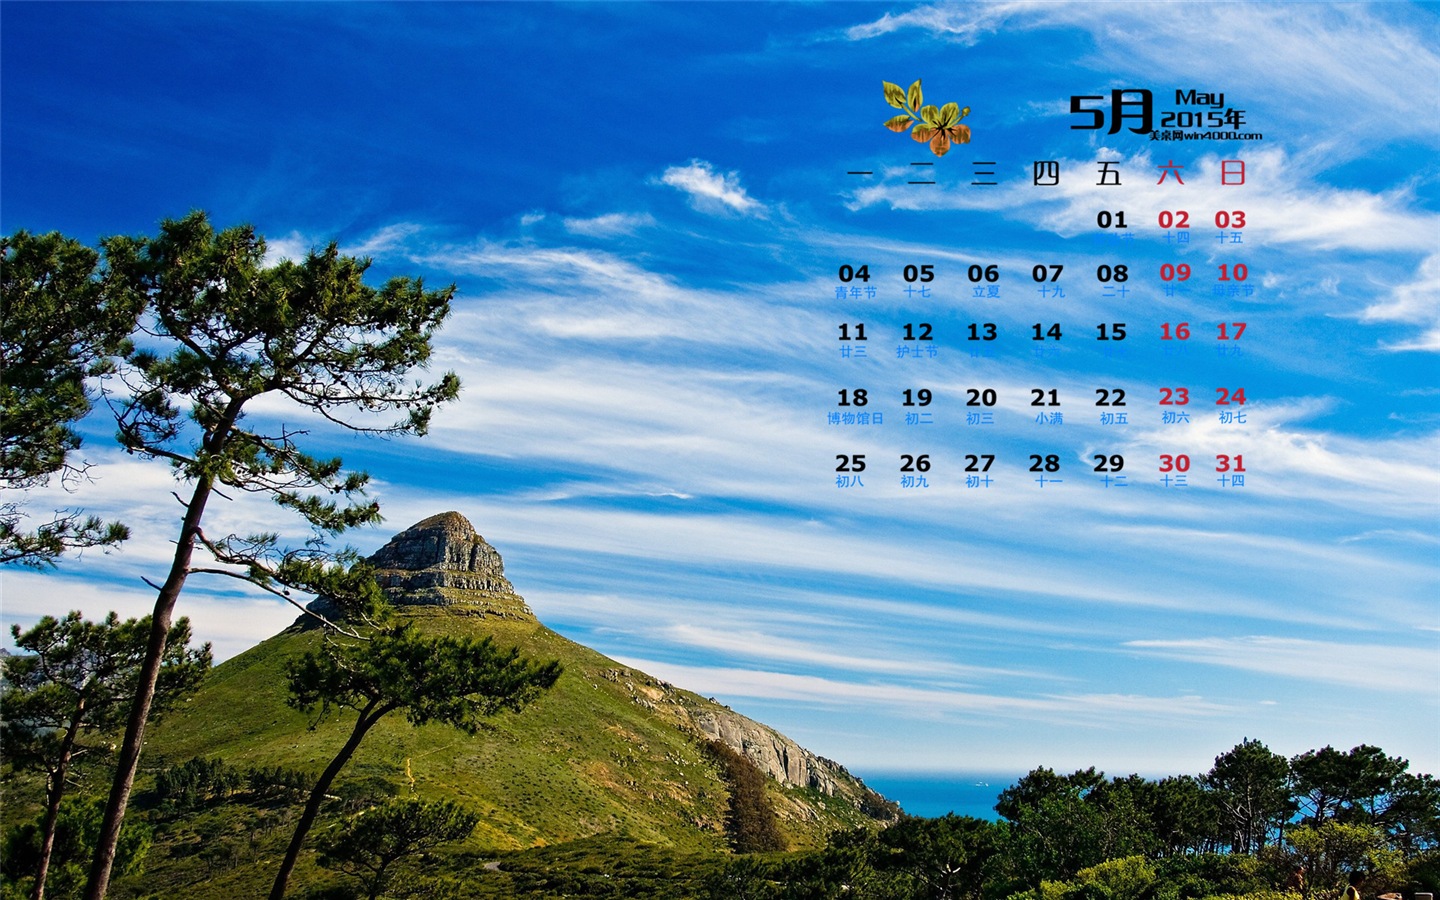 Mai 2015 calendar fond d'écran (1) #20 - 1440x900